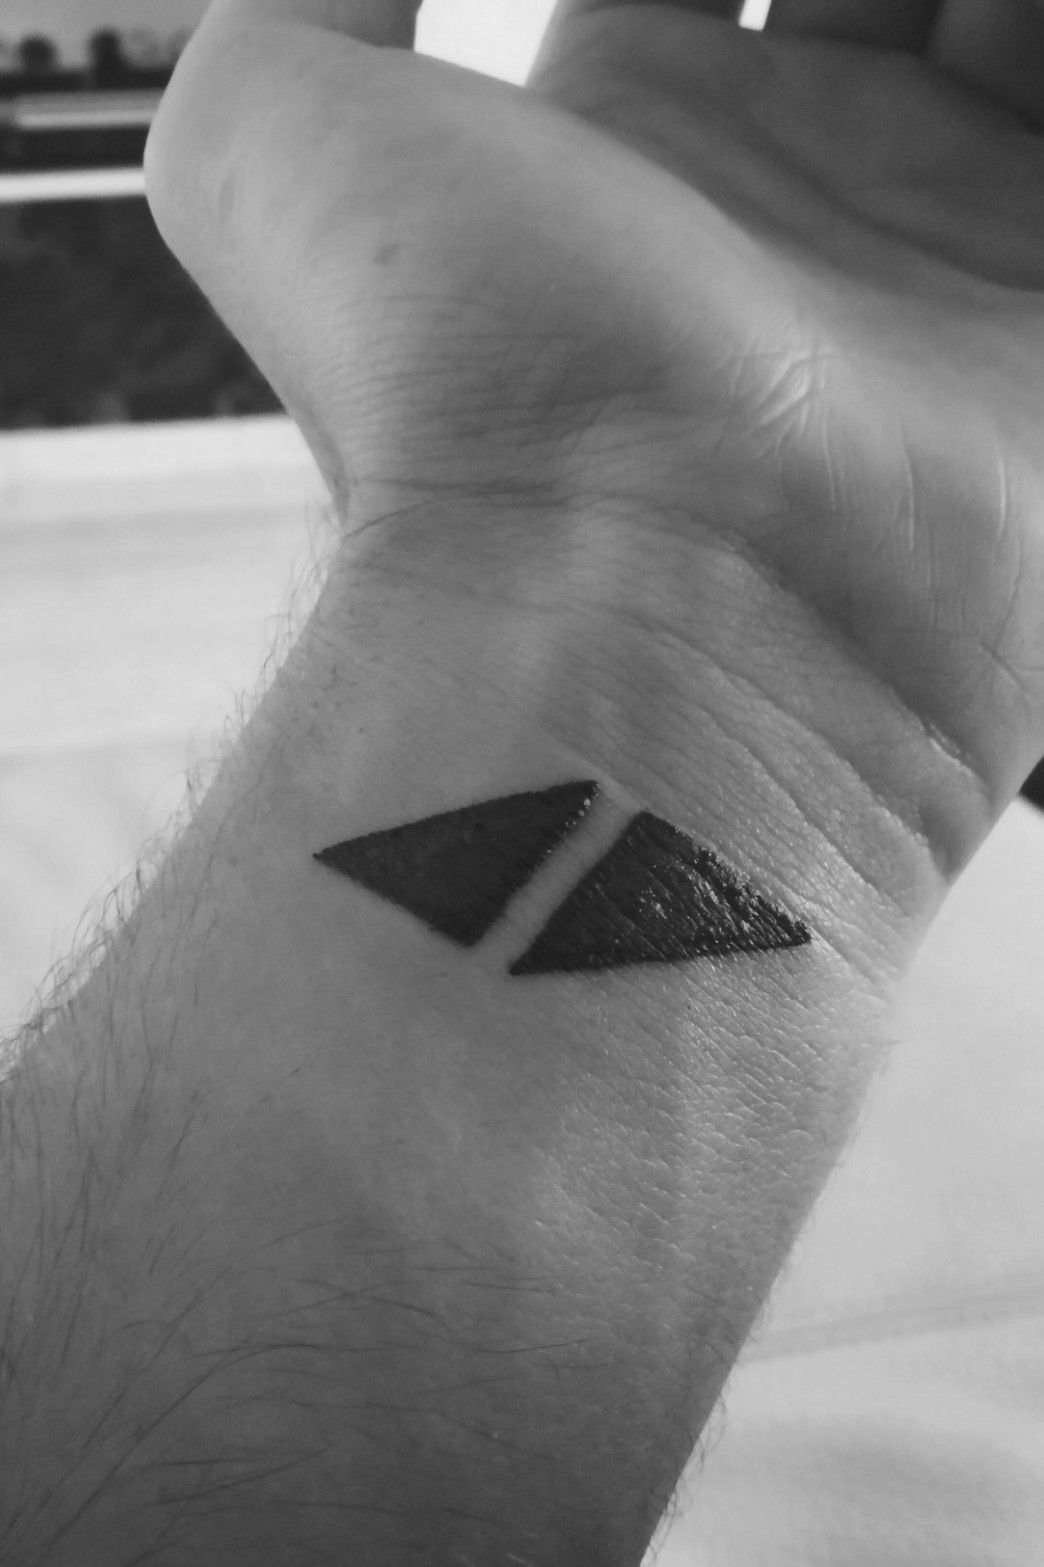 avicii symbol triangles tattoo